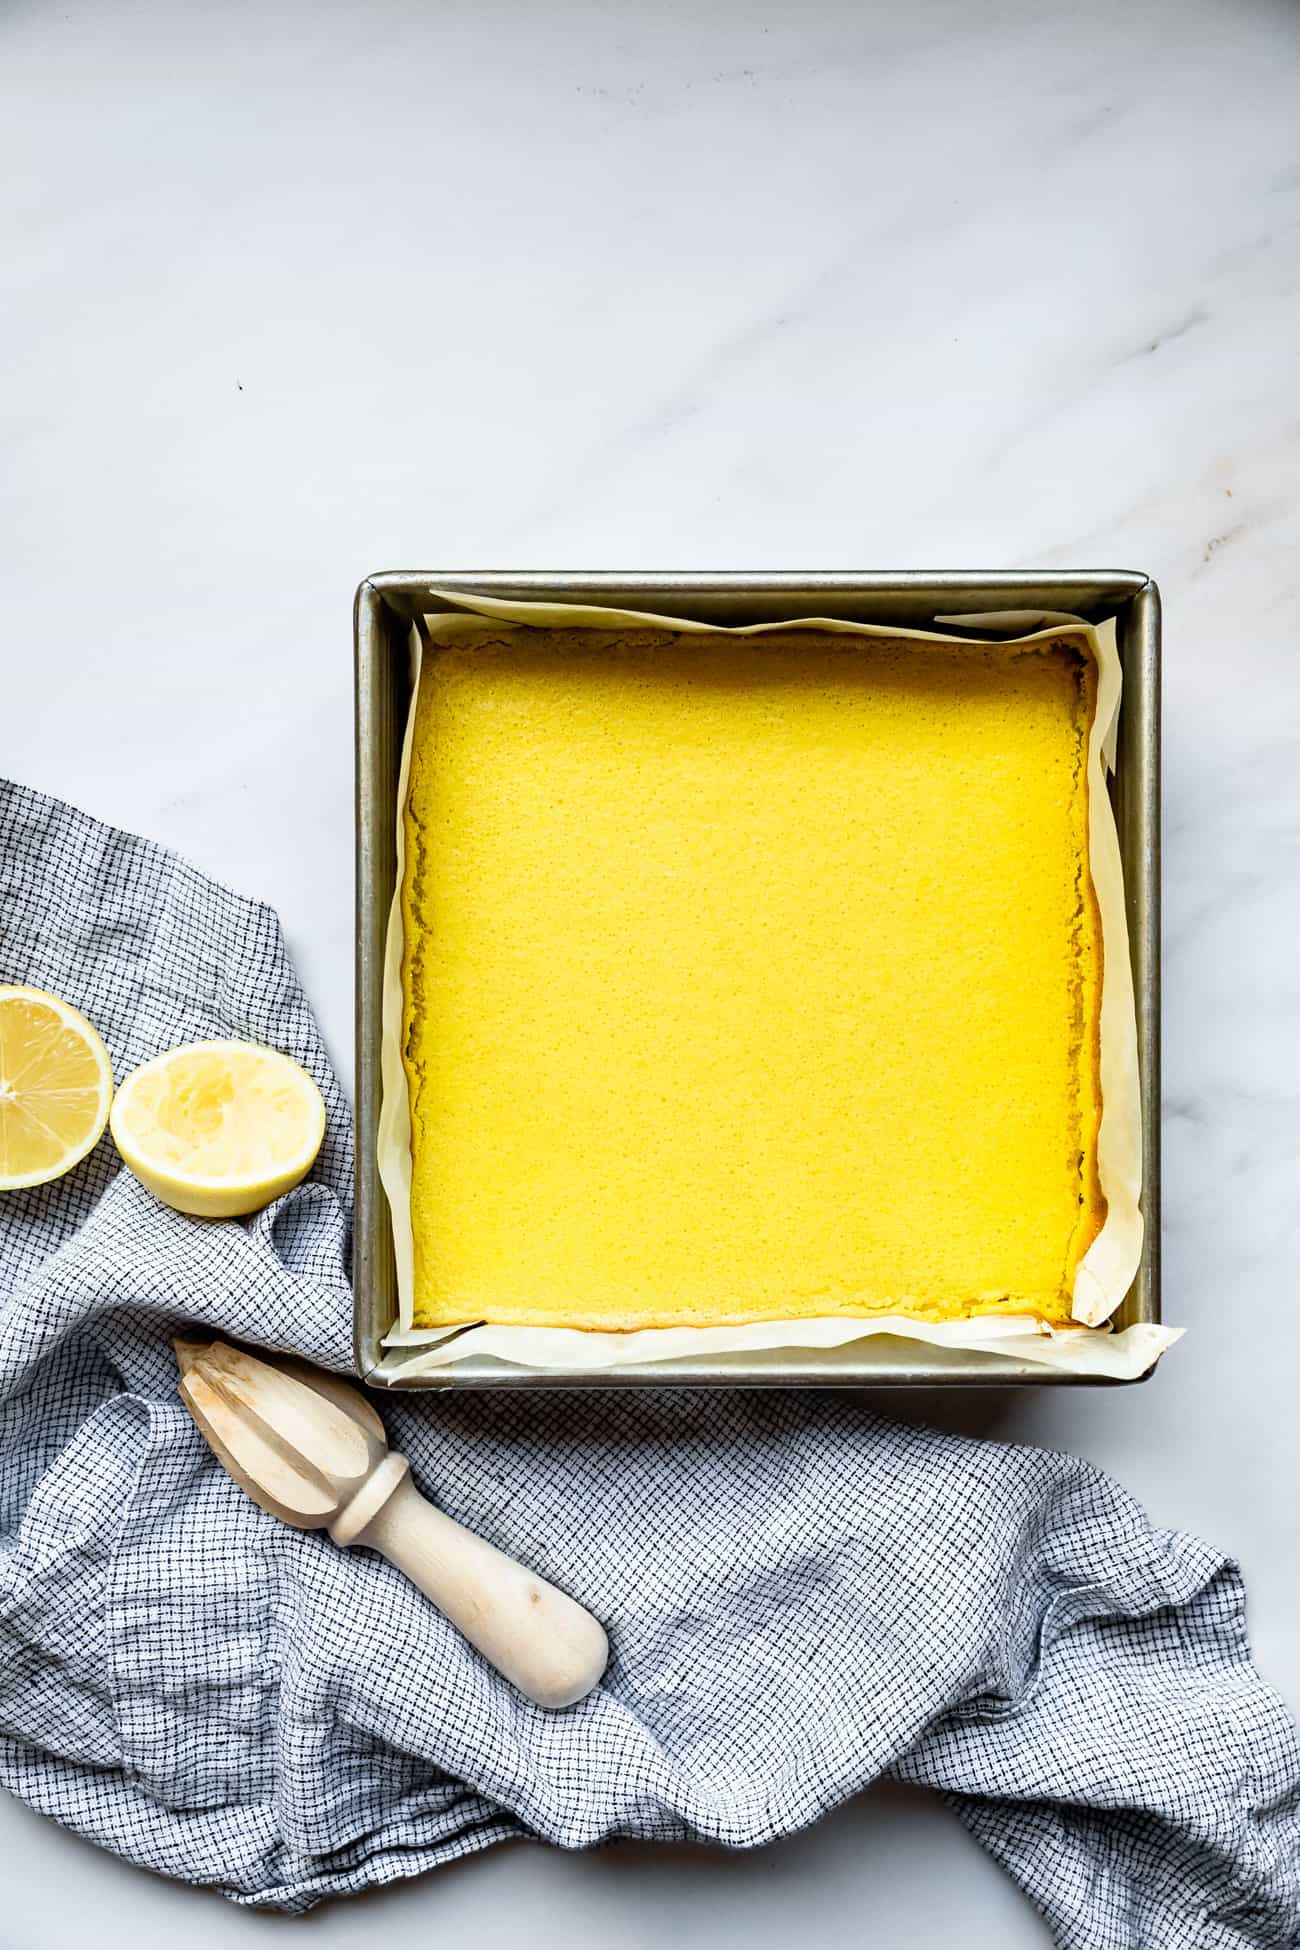 lemon bars in a baking pan before being sliced